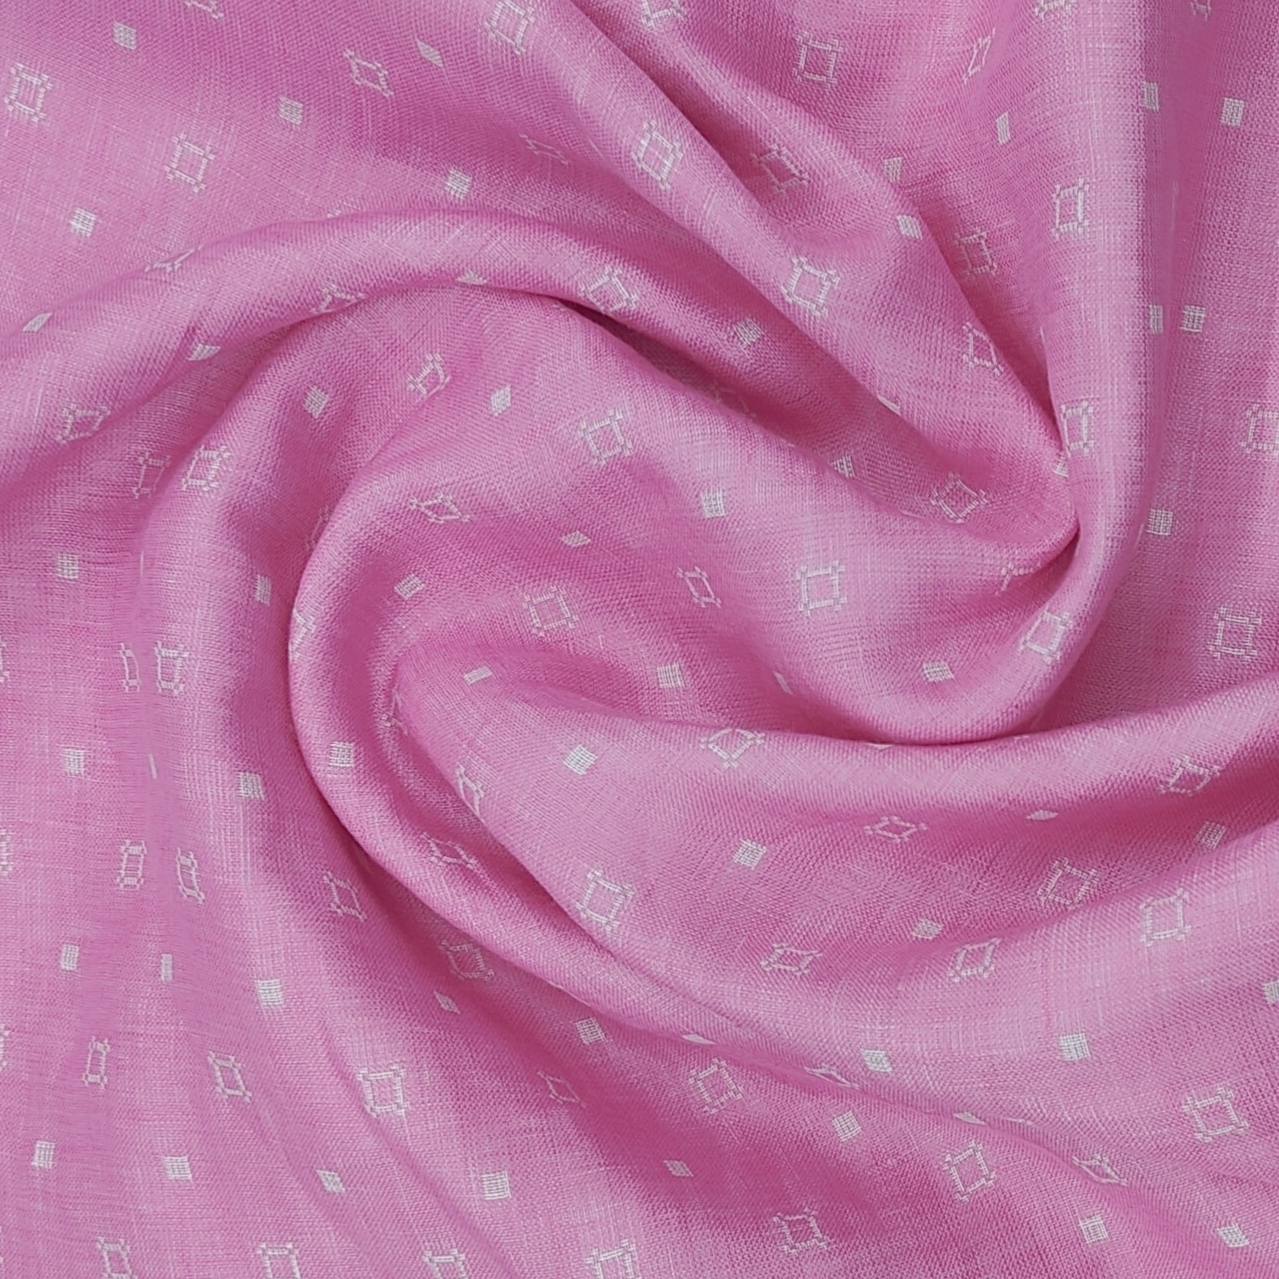 Solino 100% linen jackqurad Shirt Fabric Colour Pink